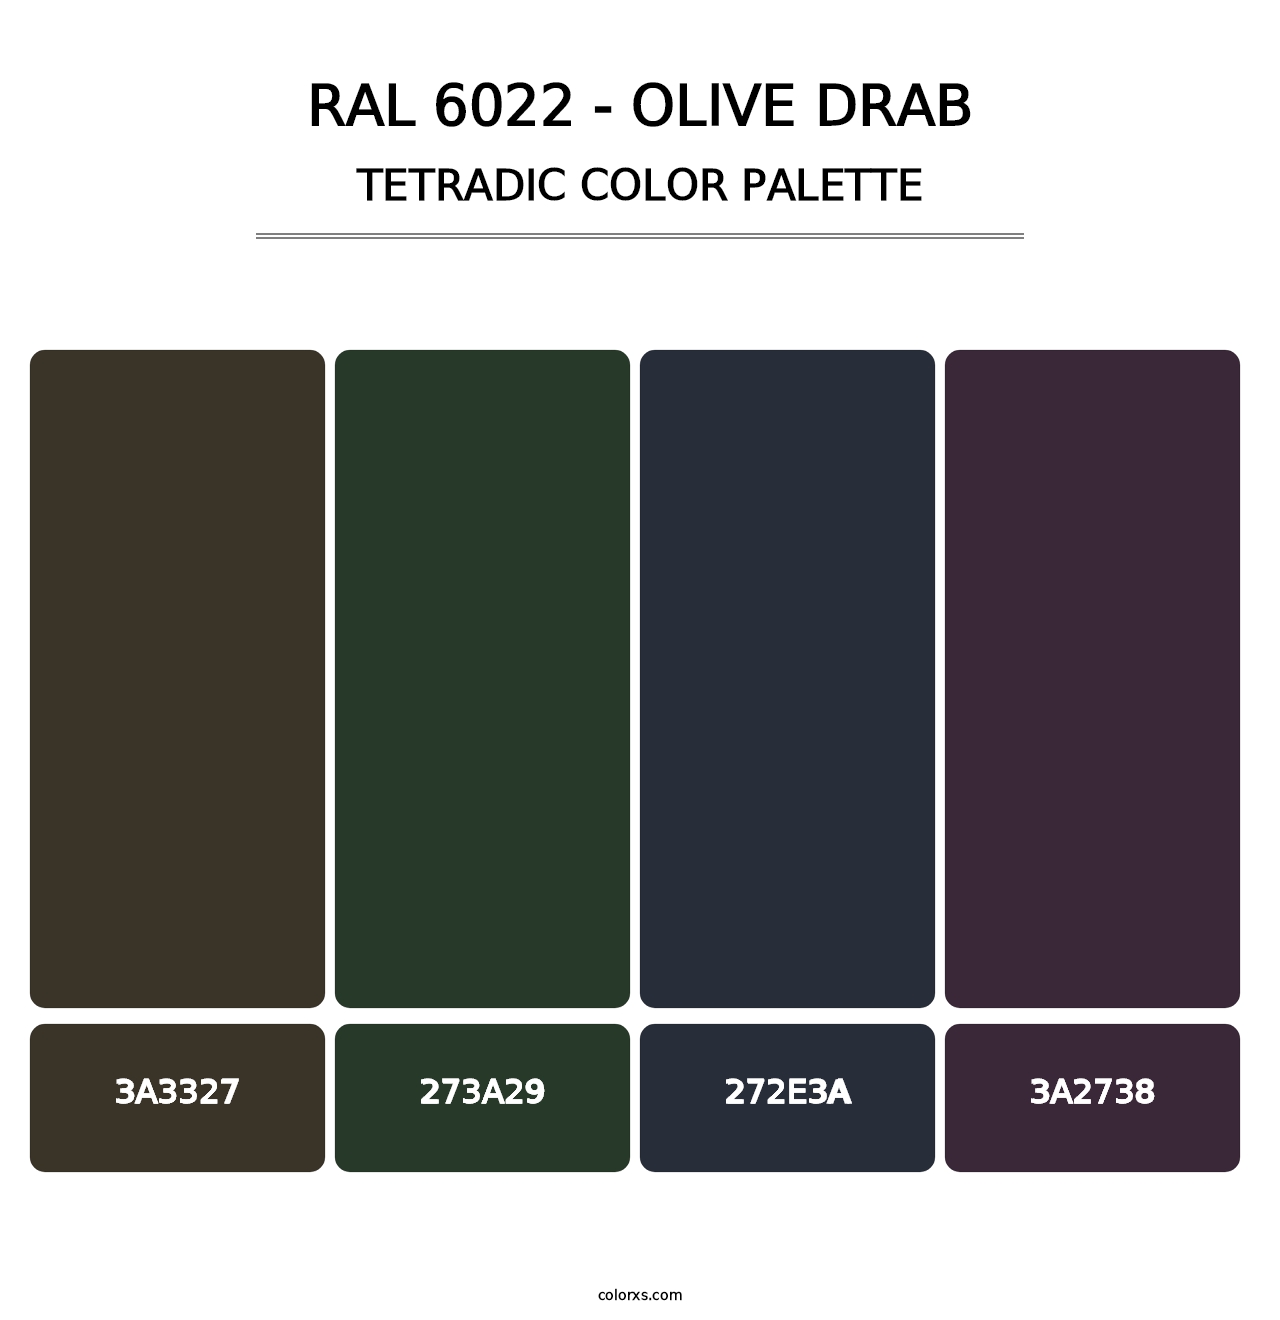 RAL 6022 - Olive Drab - Tetradic Color Palette